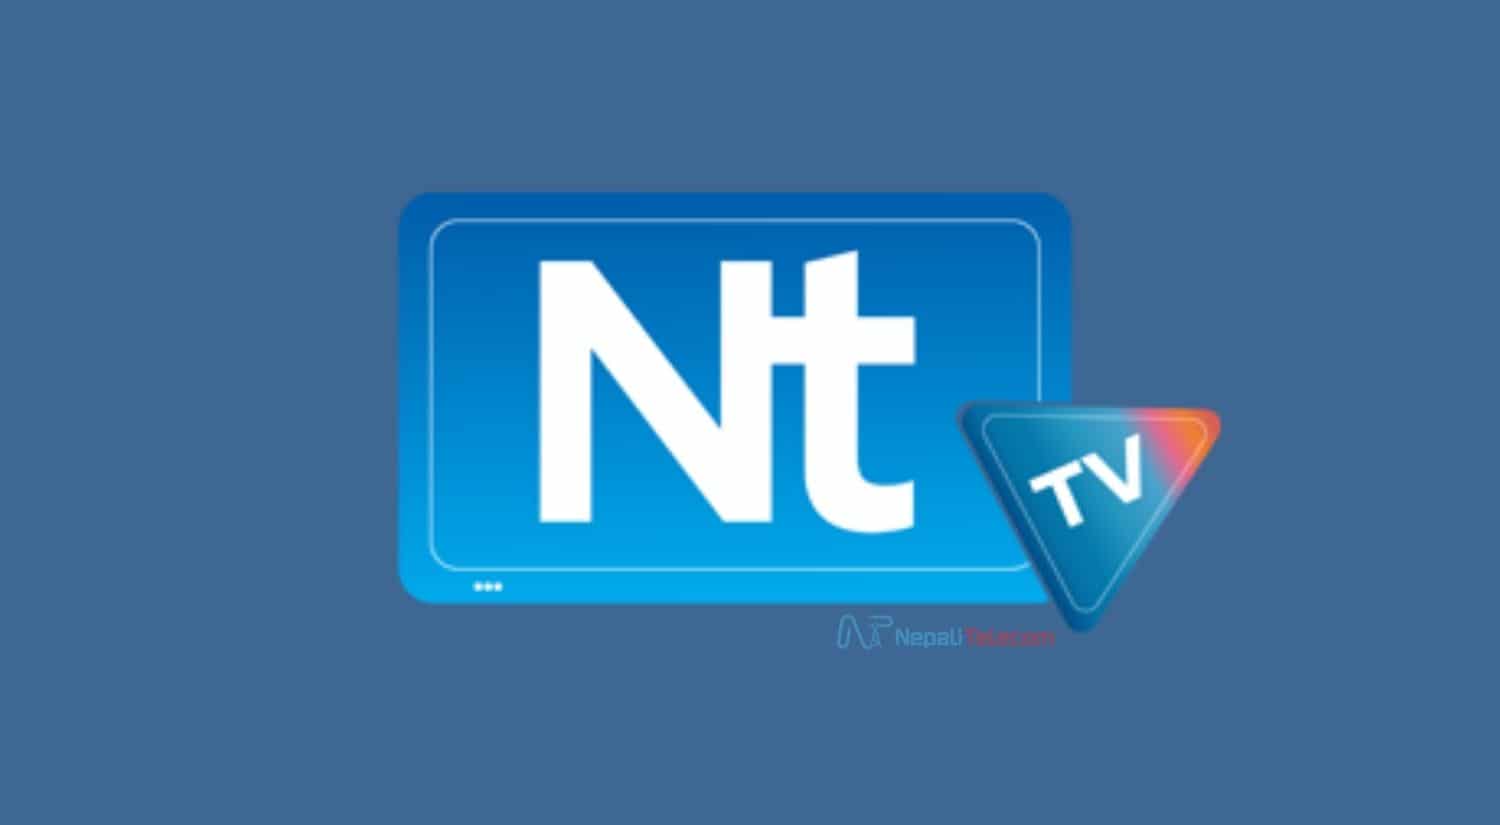 NTTV Nepal Telecom TV service